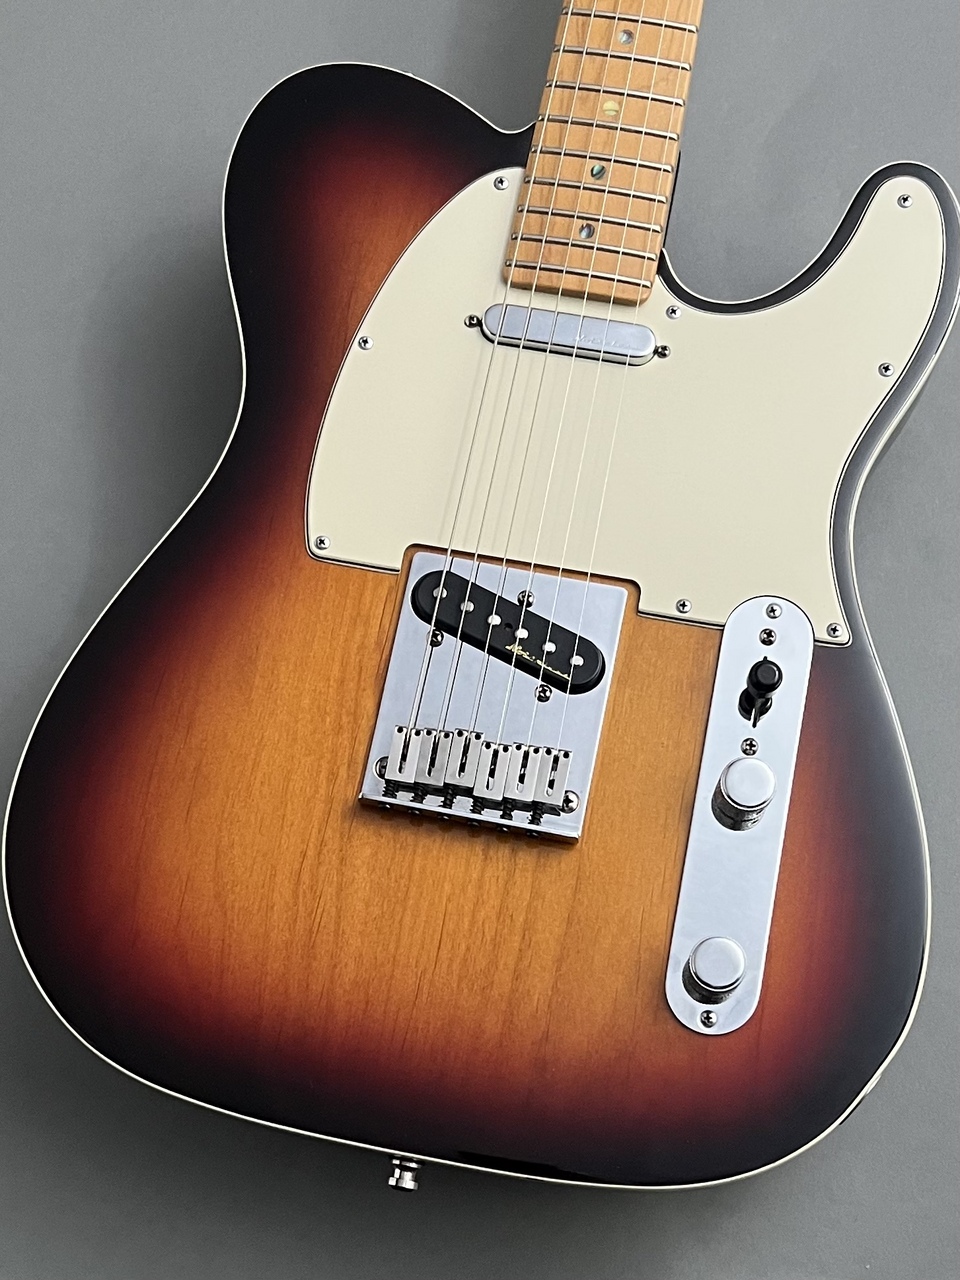 Fender American Deluxe telecaster